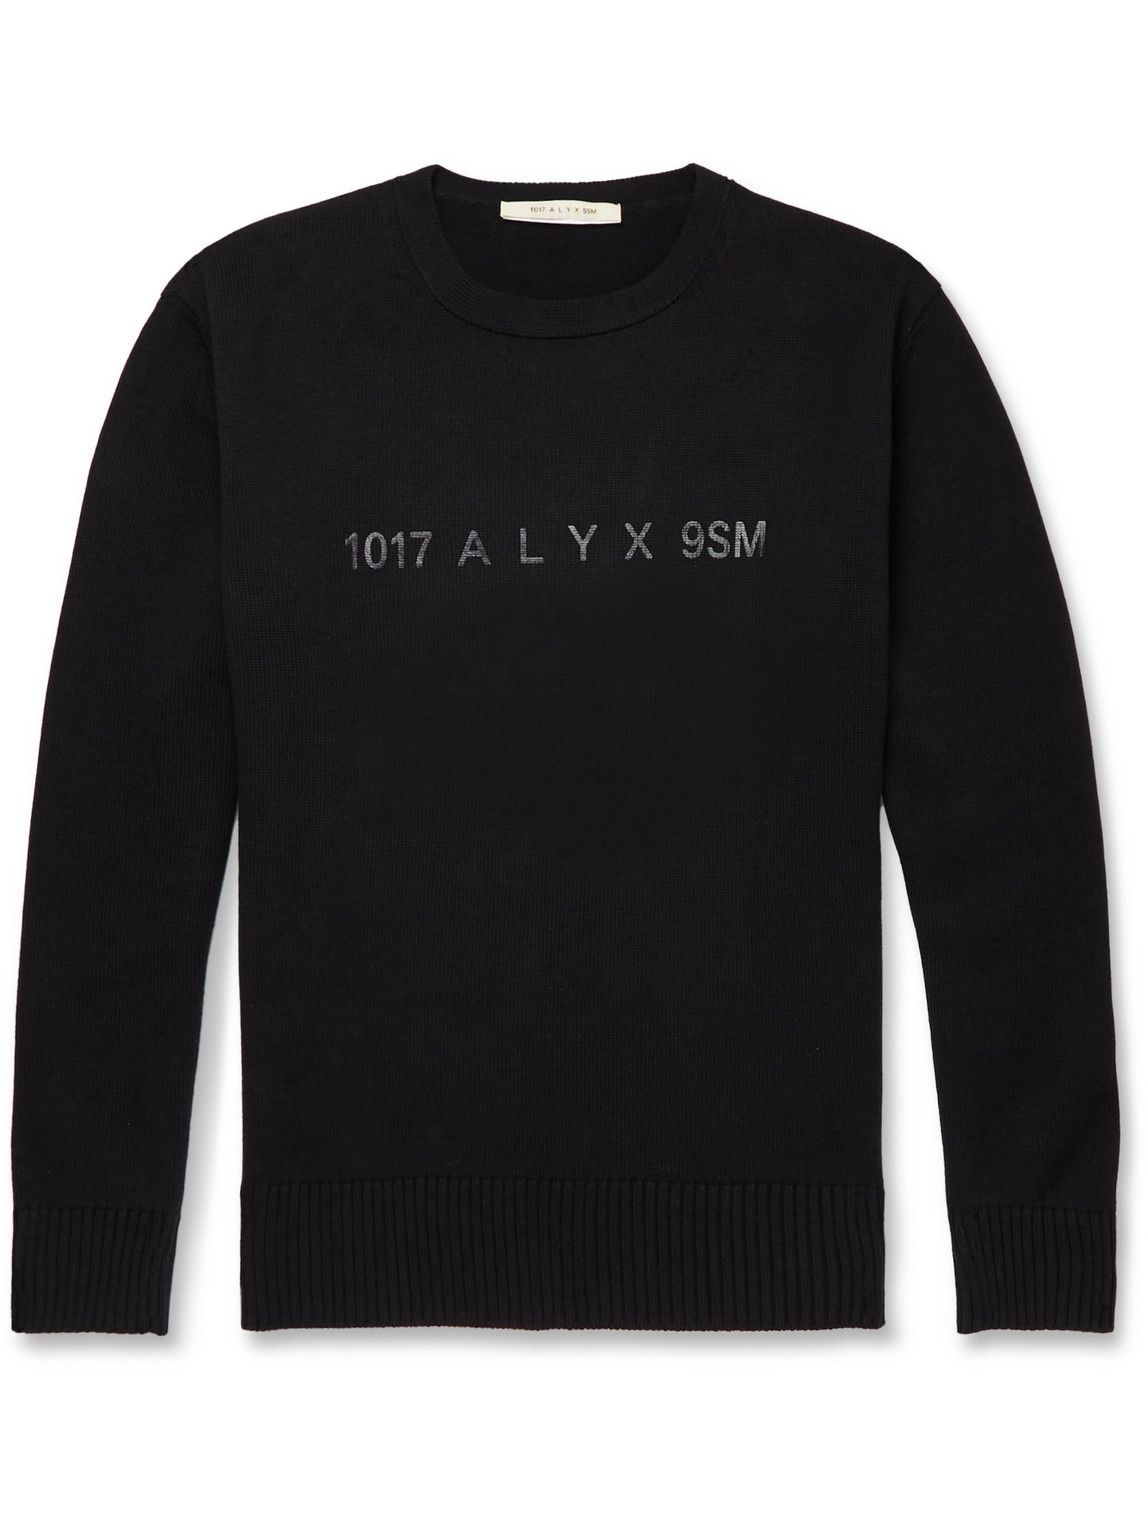 Photo: 1017 ALYX 9SM - Logo-Print Cotton Sweater - Black